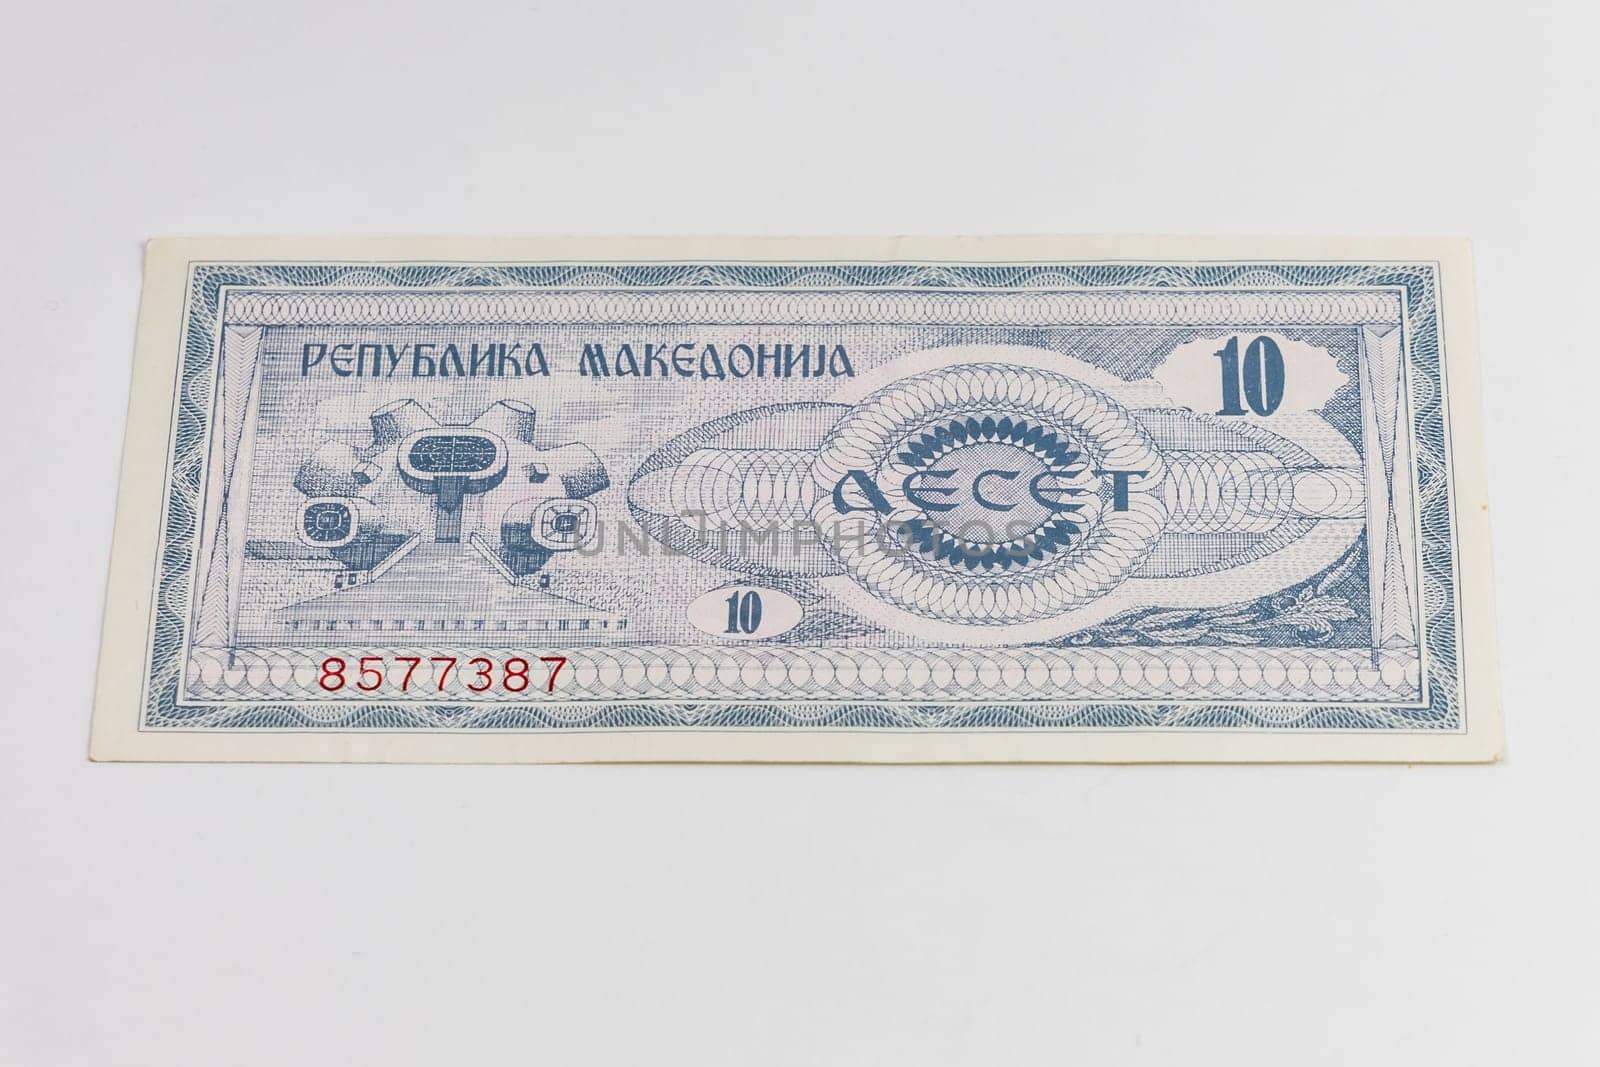 Old Macedonian banknote of 10 Denarius from 1992 year